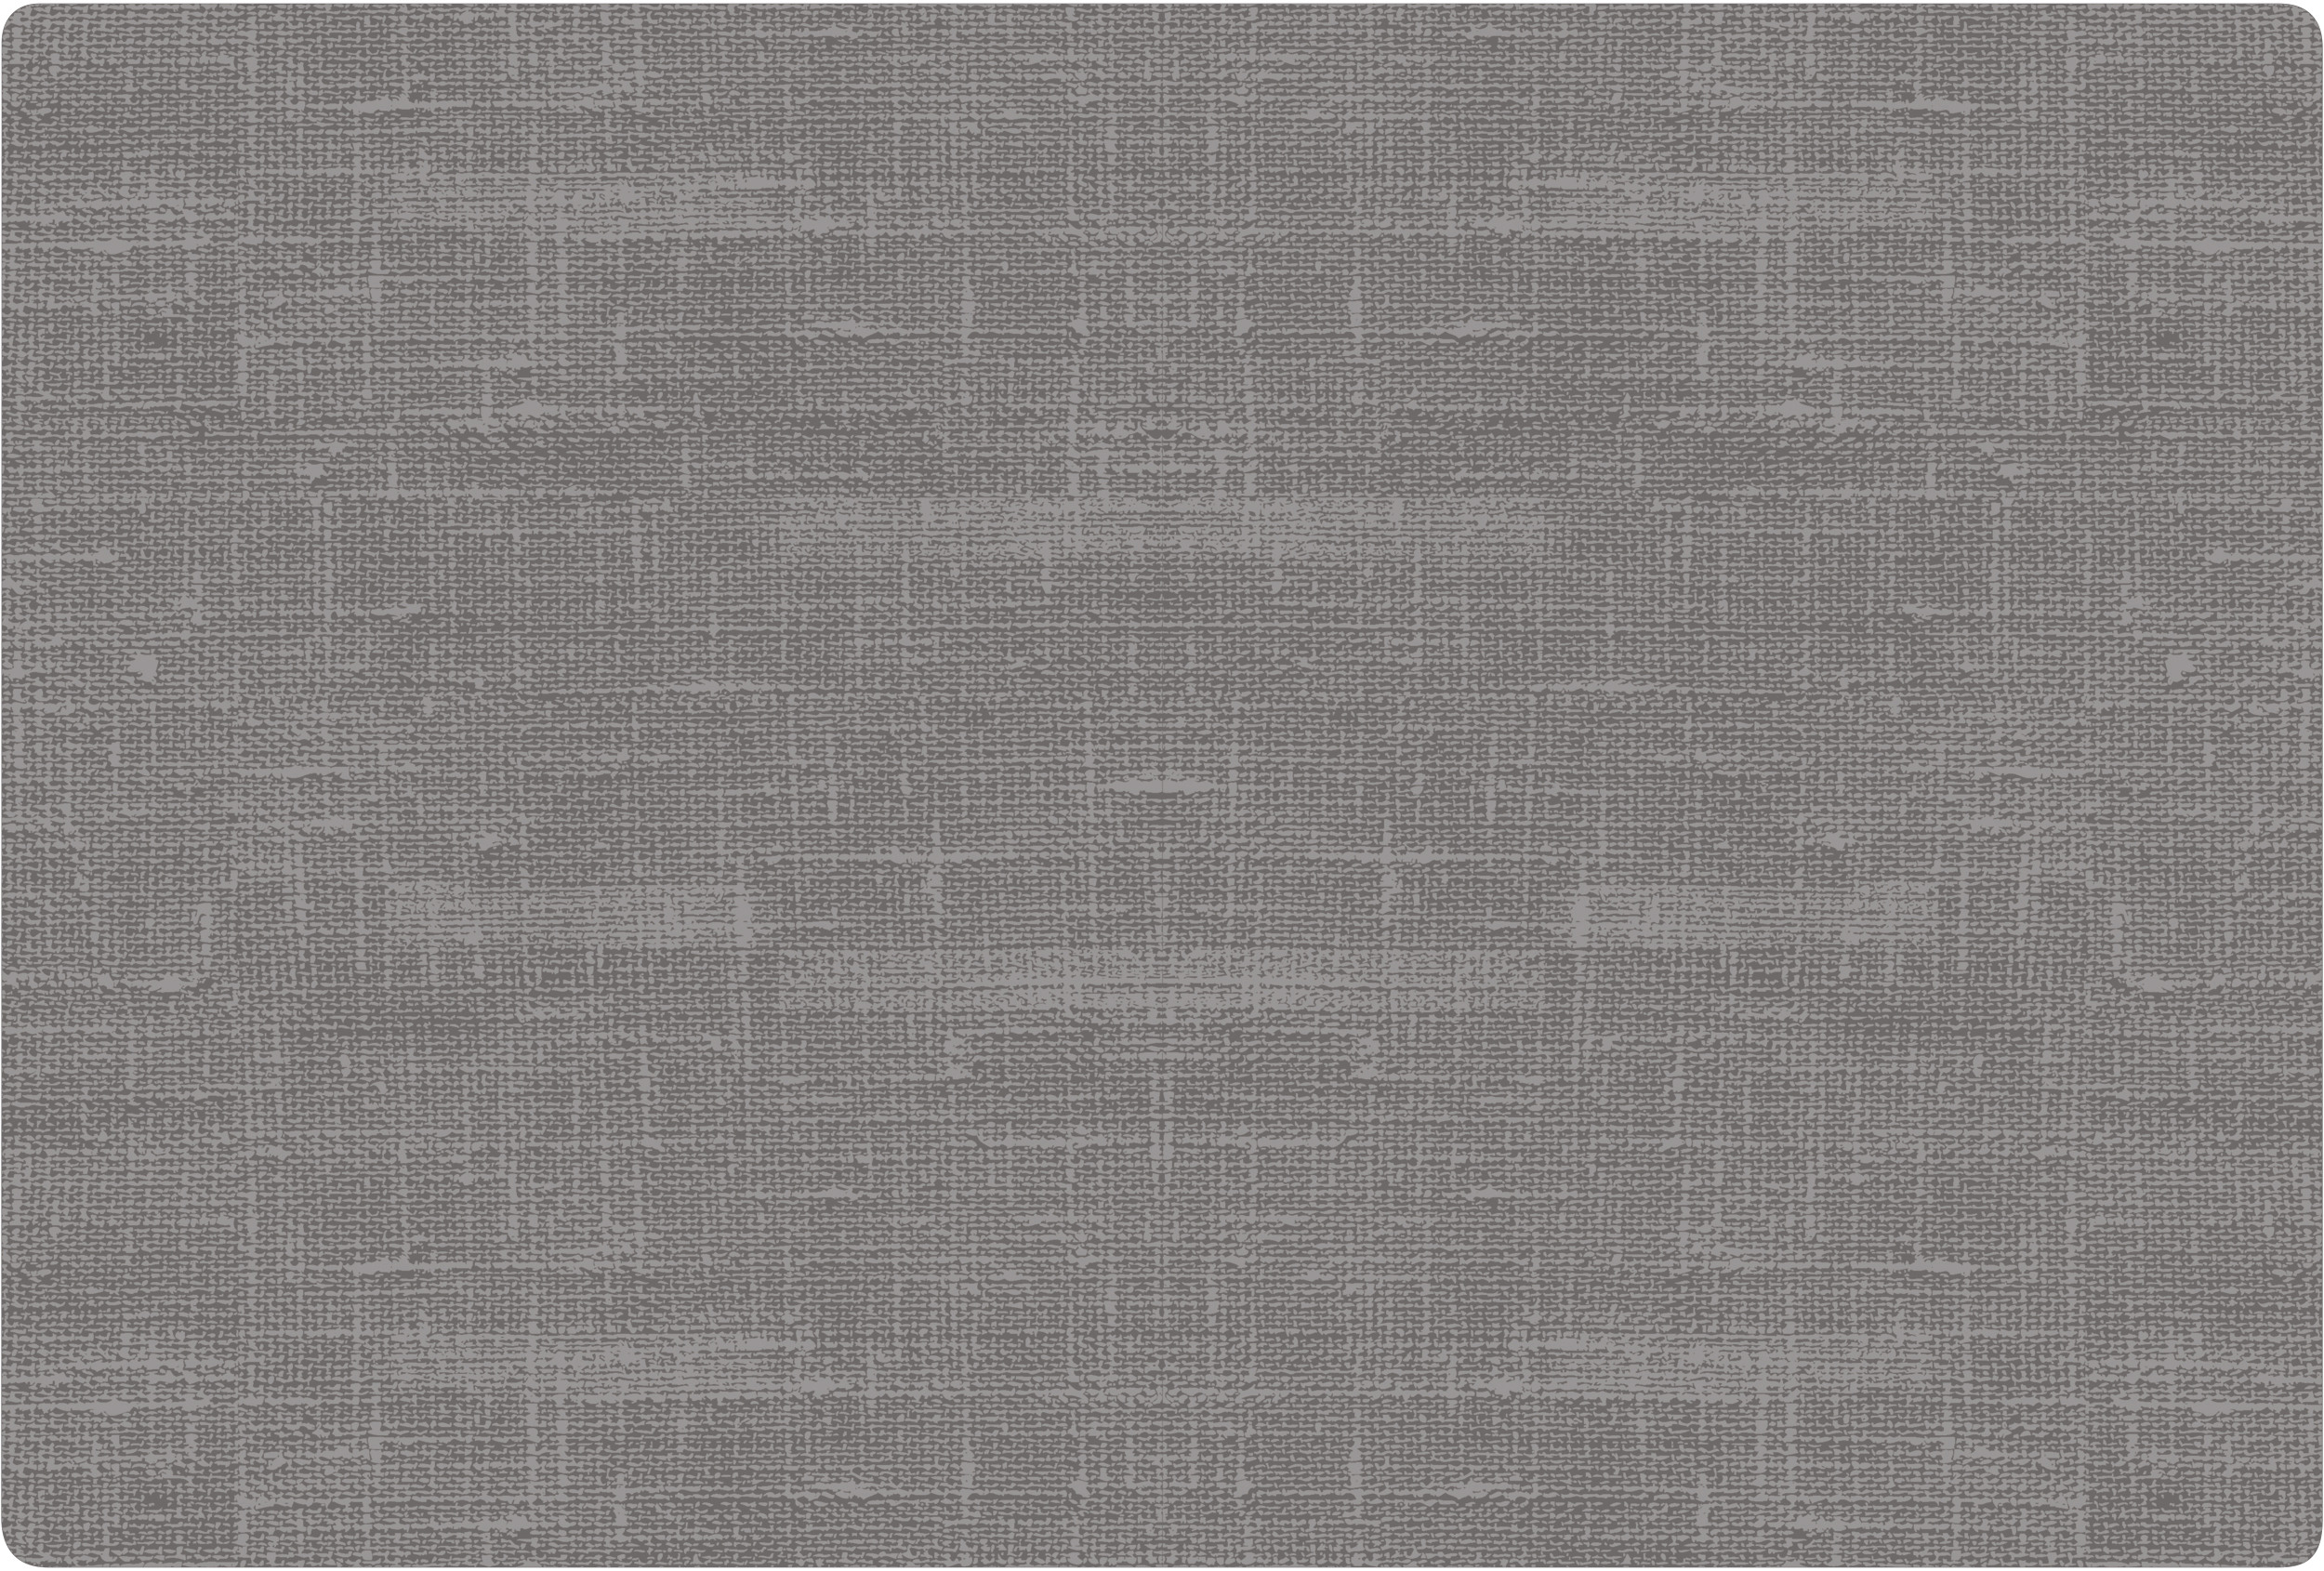 70407 Placemats silicon 30x45cm granite grey 5x6 st